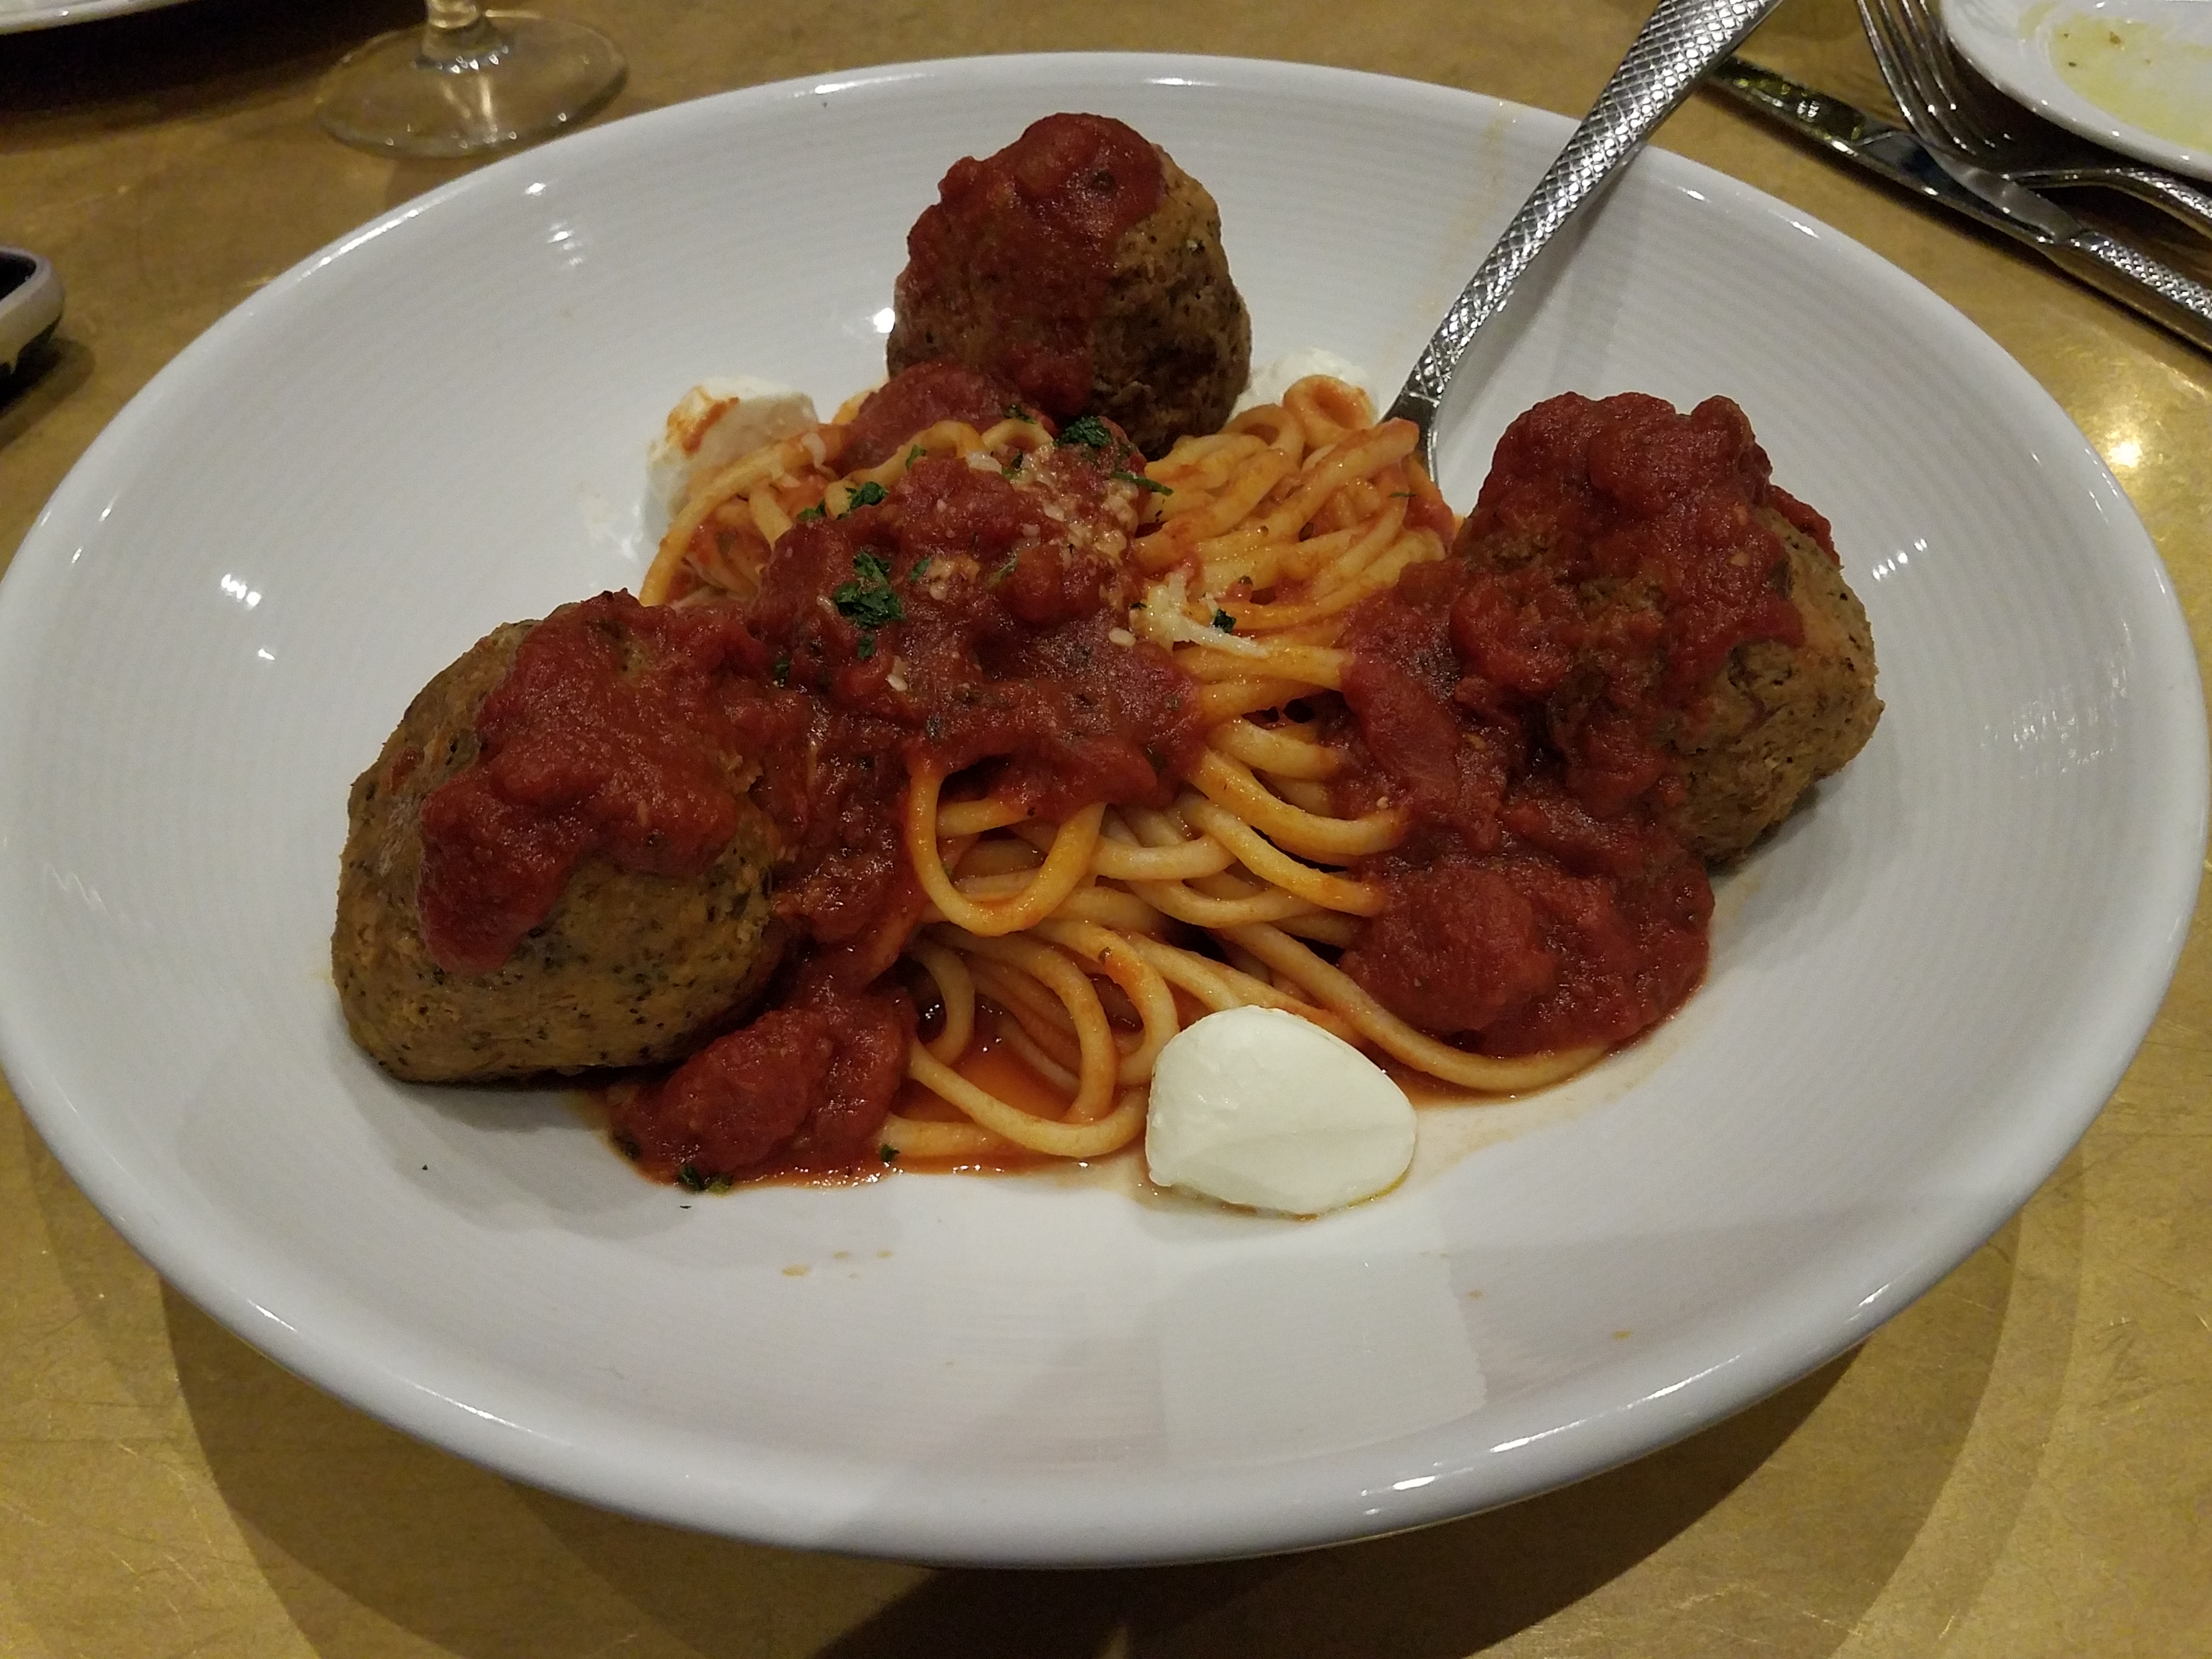 Spaghetti and meatballs at VIVO Italian Kitchen - Universal CityWalk - by unofficialuniversal.com.